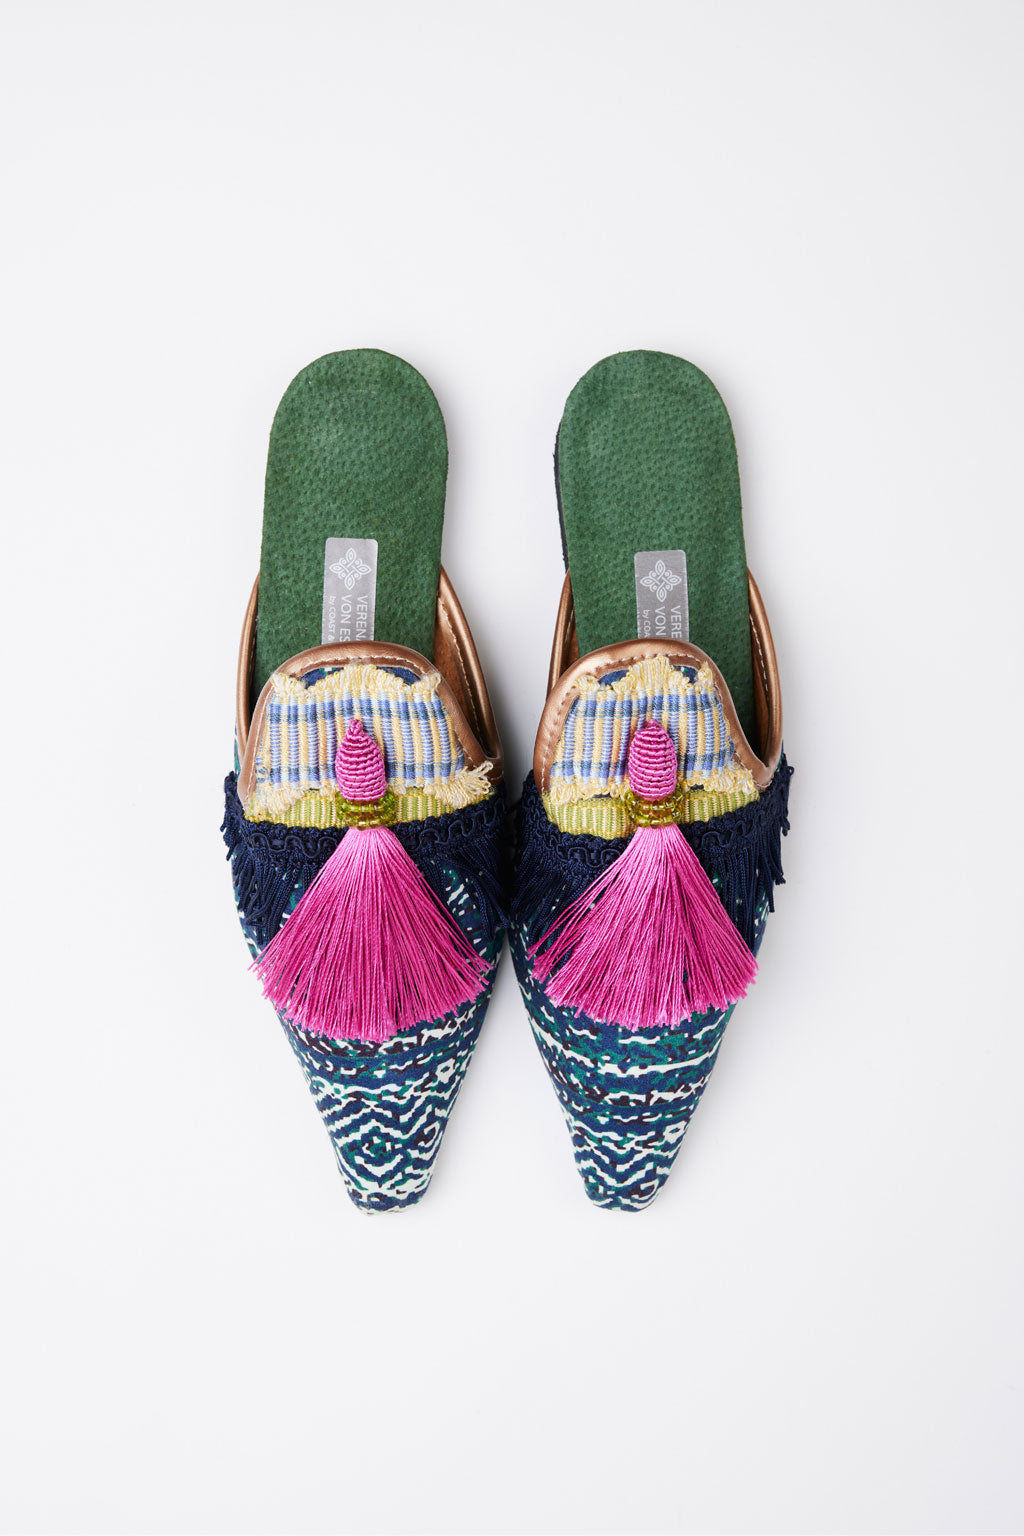 Slippers de luxe handmade Emefa Gr. 36